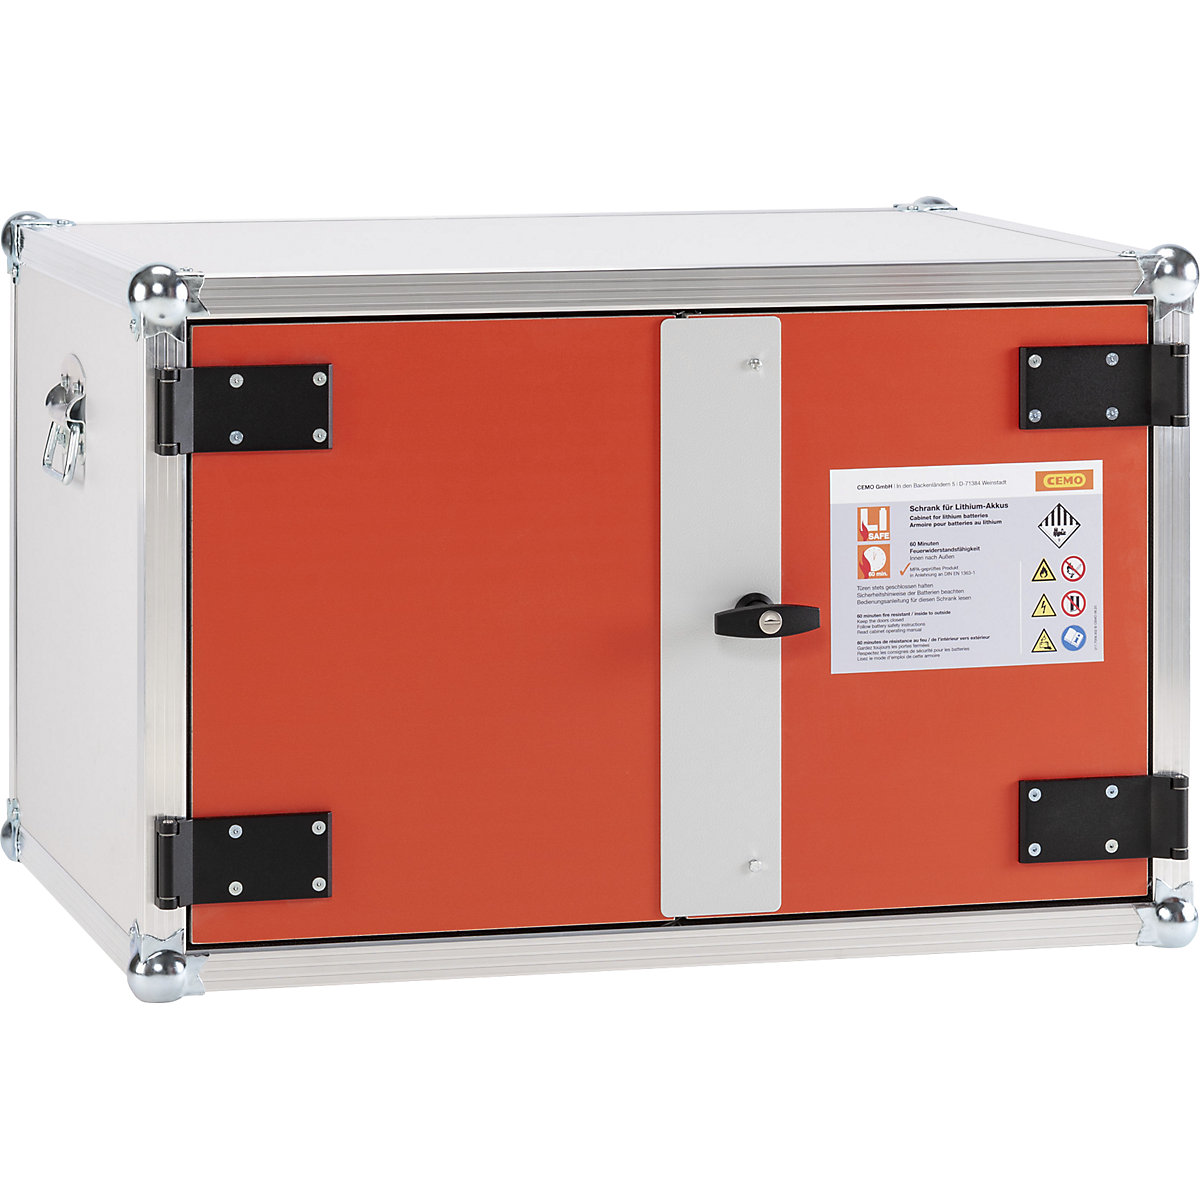 Akku-Sicherheits-Ladeschrank FWF 60 CEMO, BASIC, BxTxH 800 x 660 x 520 mm, orange/grau